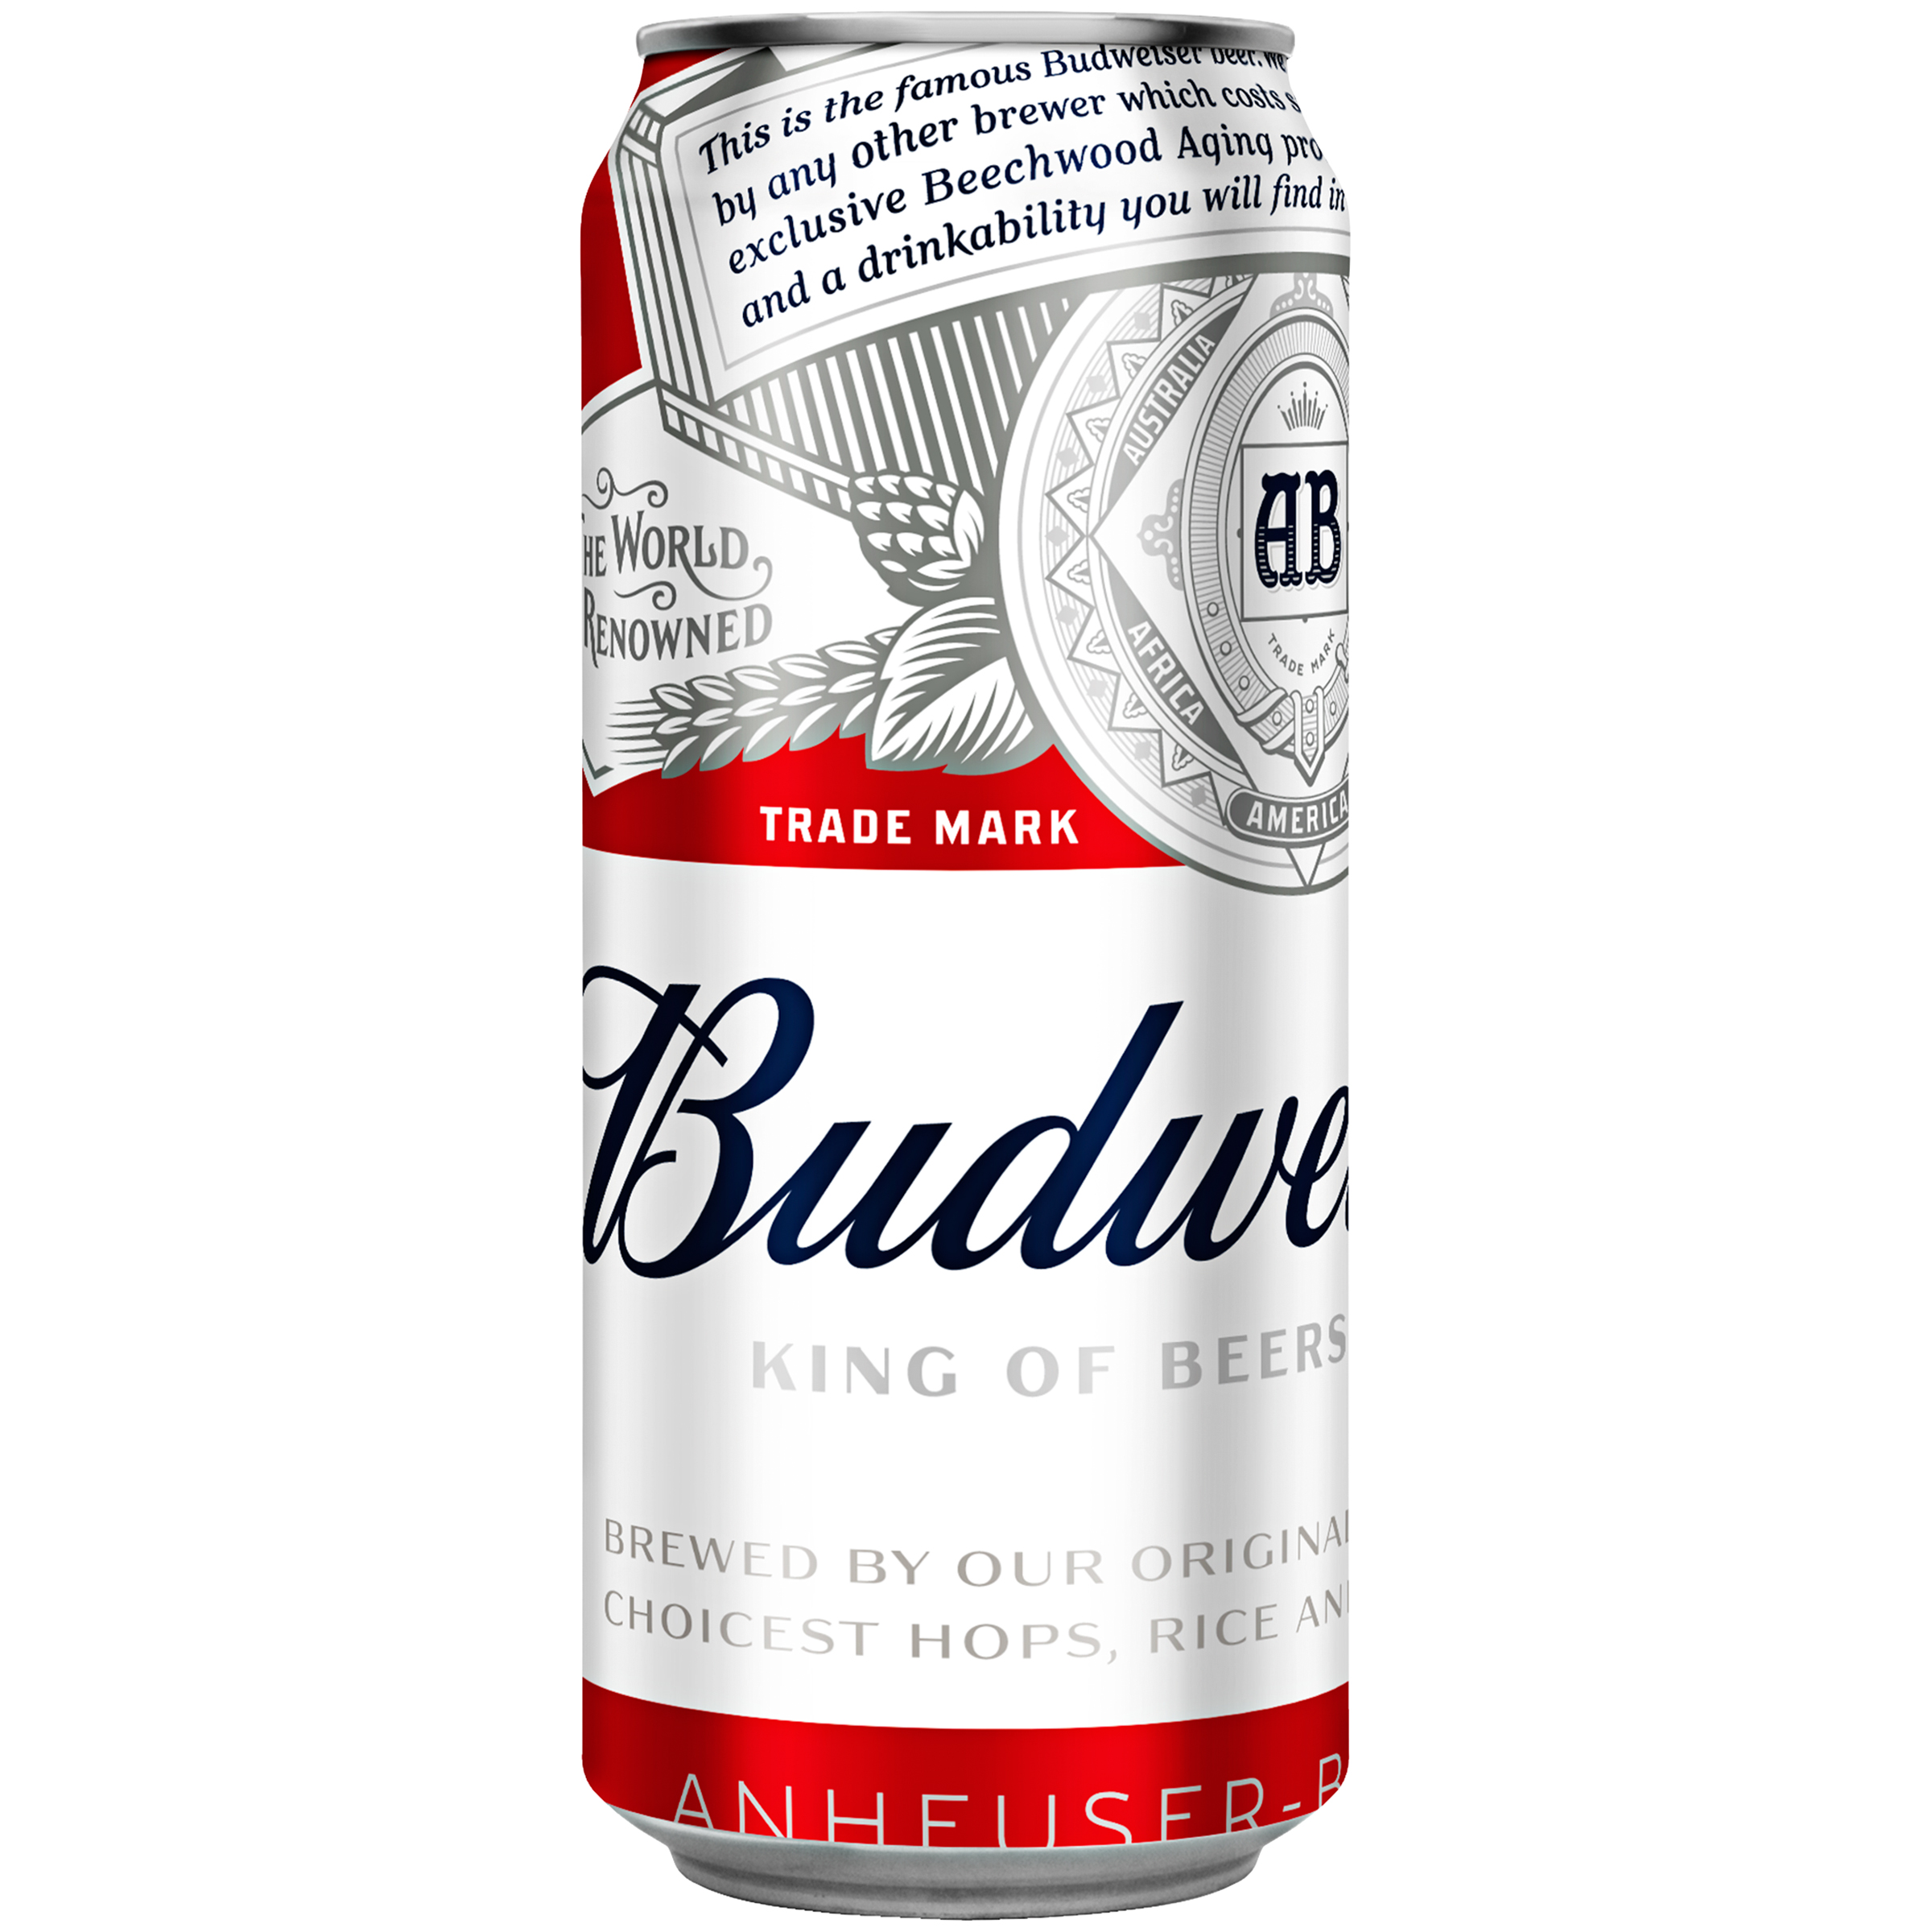 Бад кб. Пиво "5,0 Original" Lager. Budweiser пиво. Budweiser пиво банка. Американский БАД пиво.